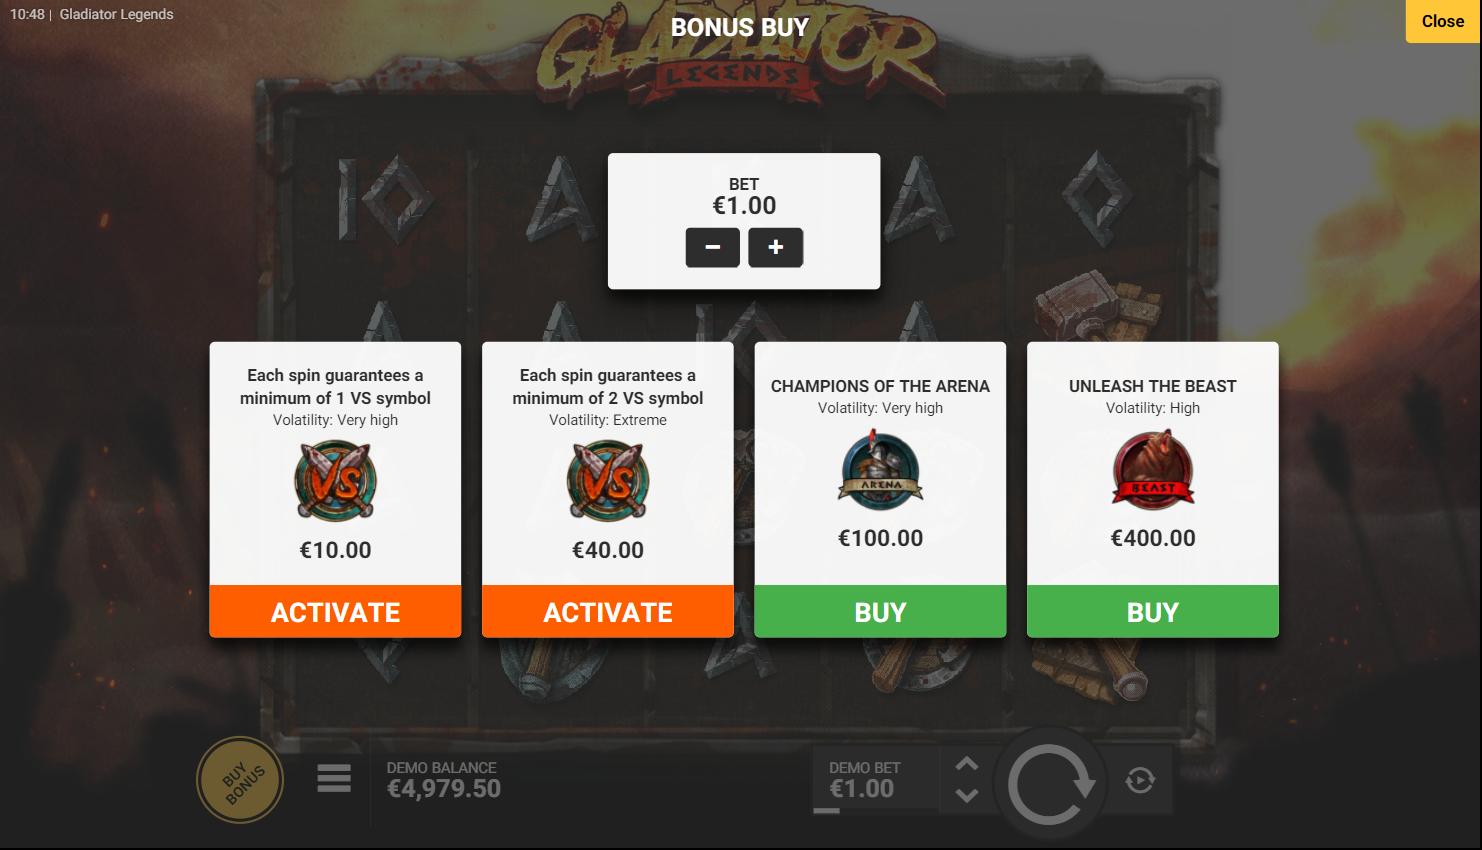 Gladiator Legends Bonus Buy Options